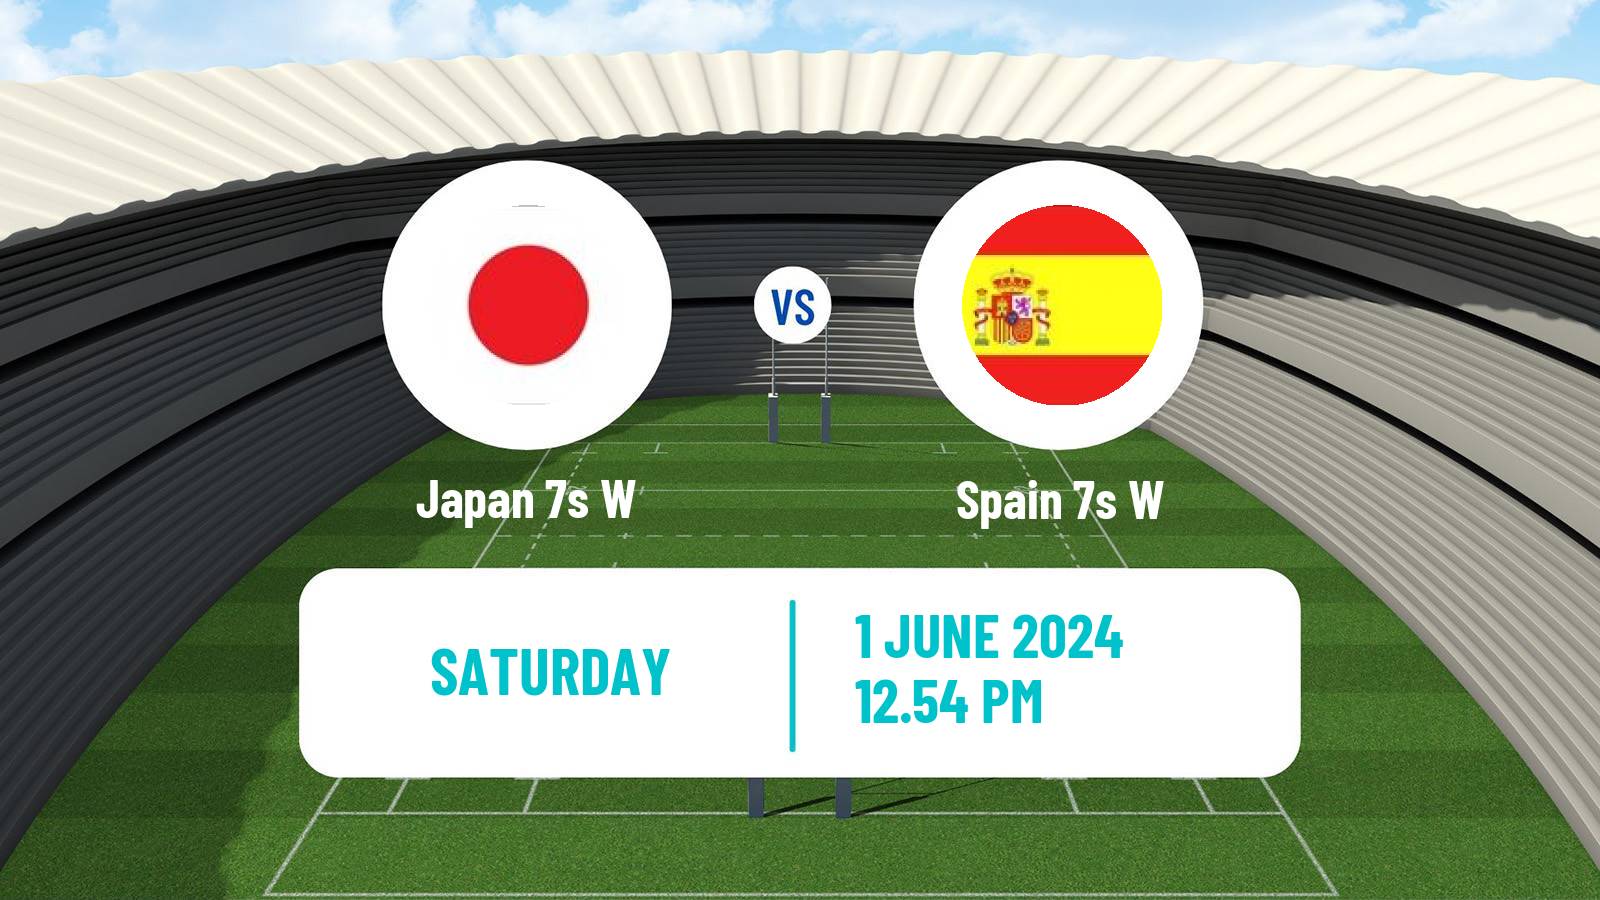 Rugby union Sevens World Series Women - Spain Japan 7s W - Spain 7s W